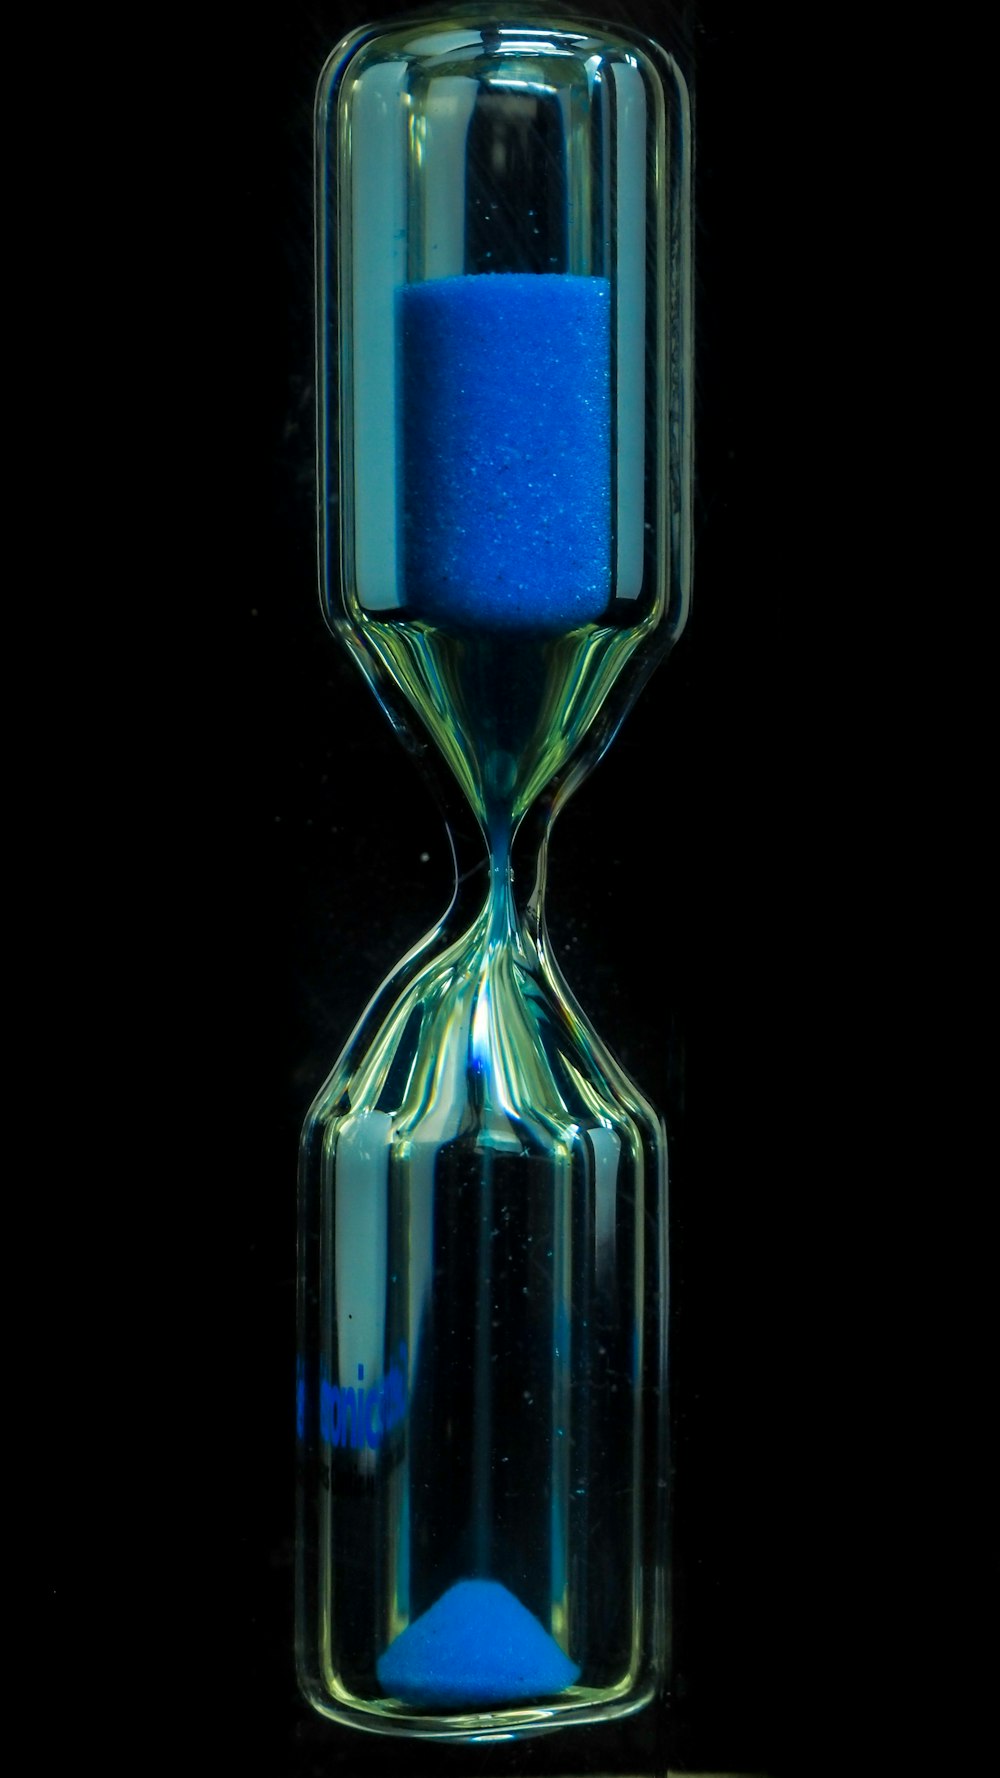 Reloj de arena de vidrio transparente con líquido azul